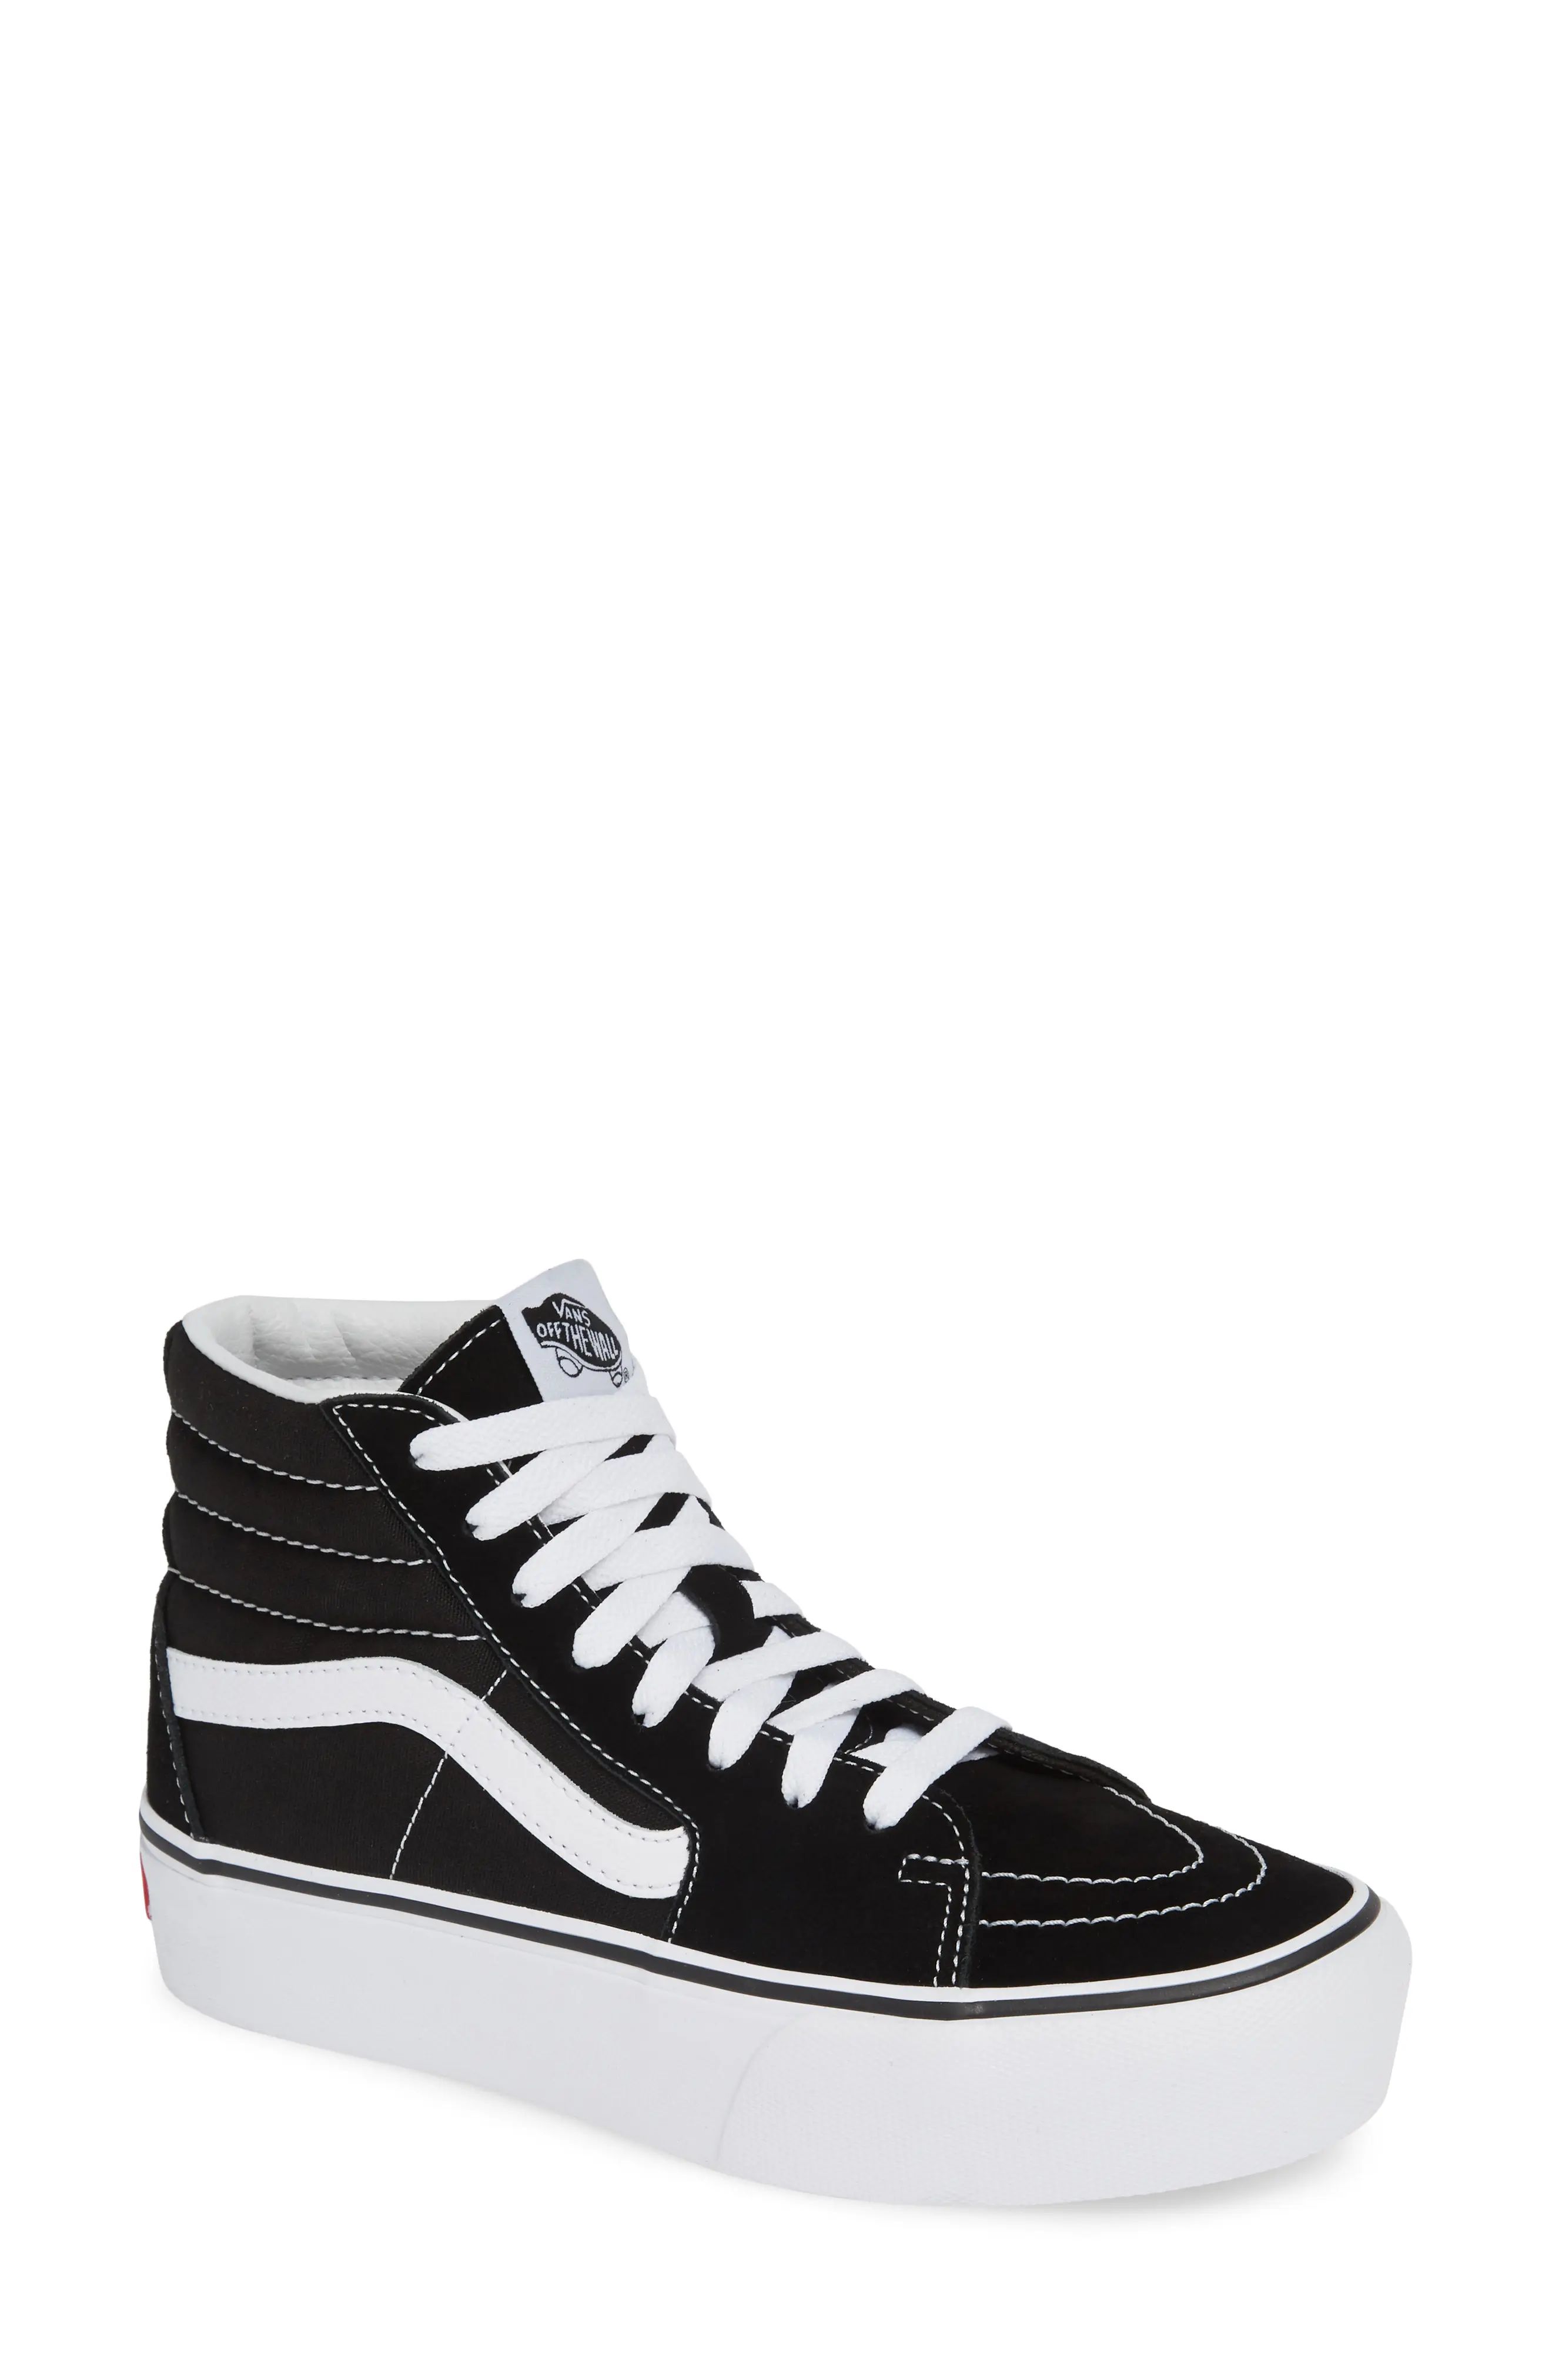 Vans Sk8-Hi Platform Sneaker, Size 7.5 Women's in Black/True White at Nordstrom | Nordstrom